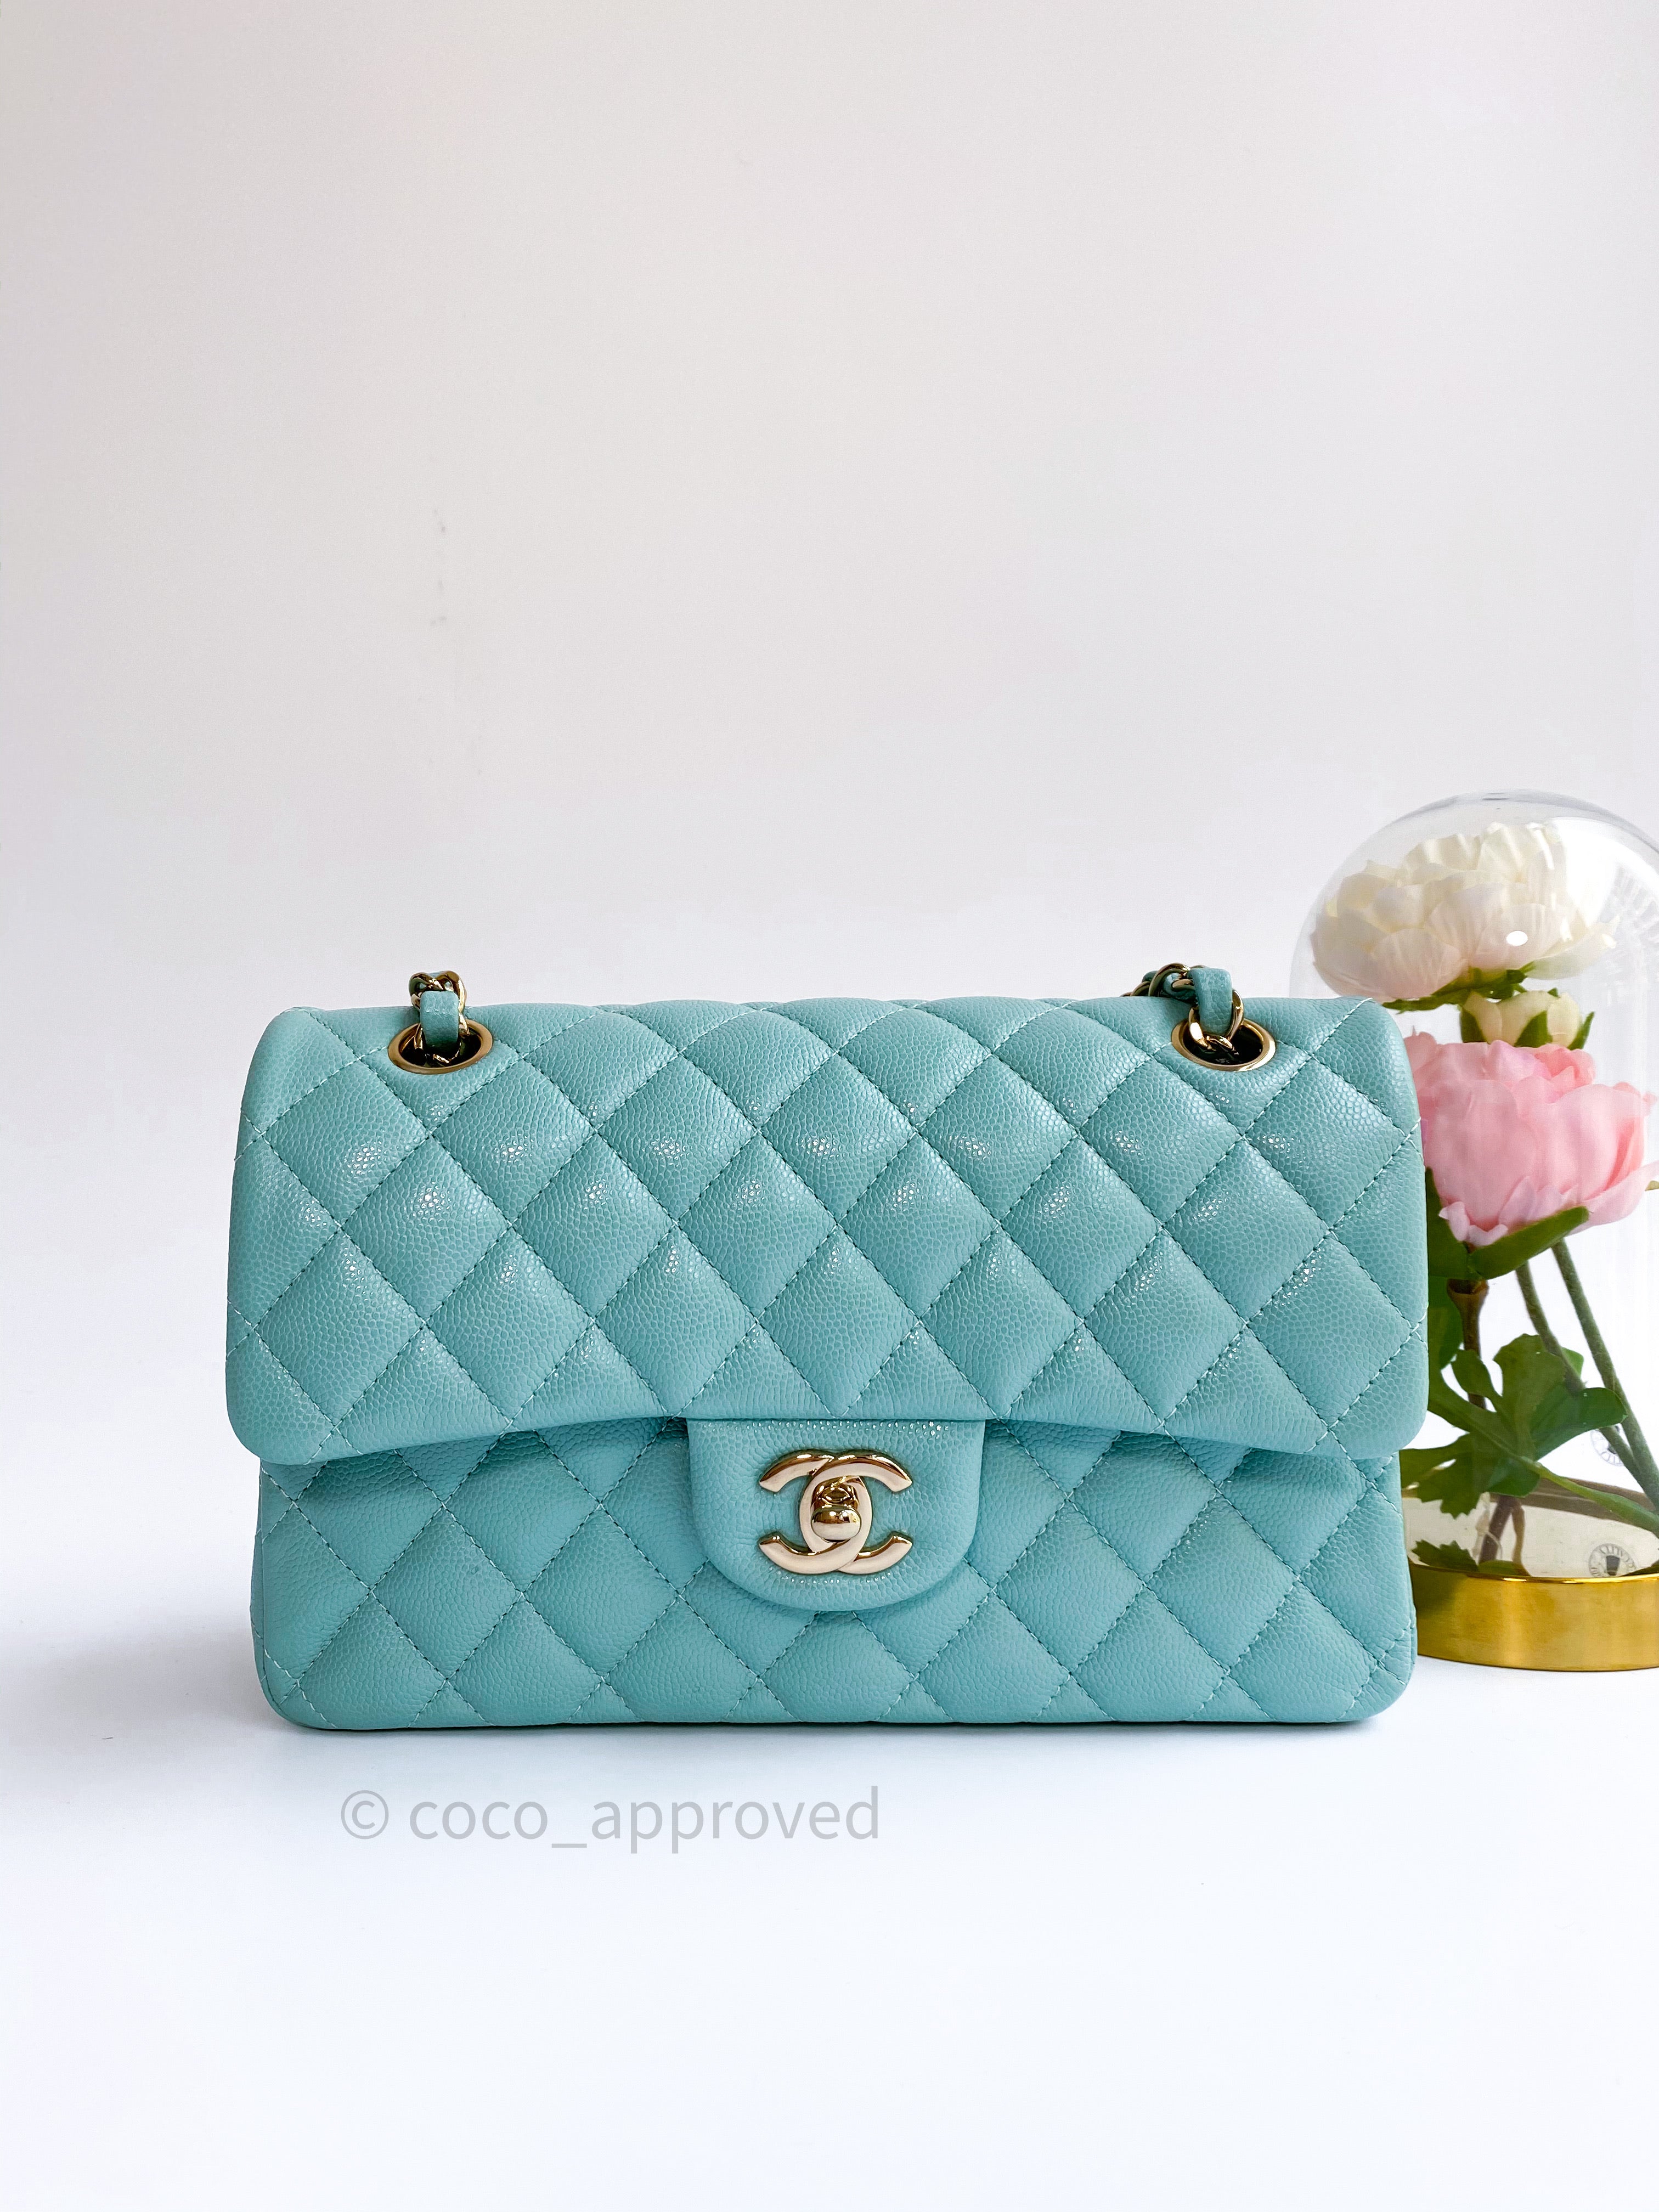 Chanel S/M Small Classic Flap Tiffany Blue Caviar Gold Hardware